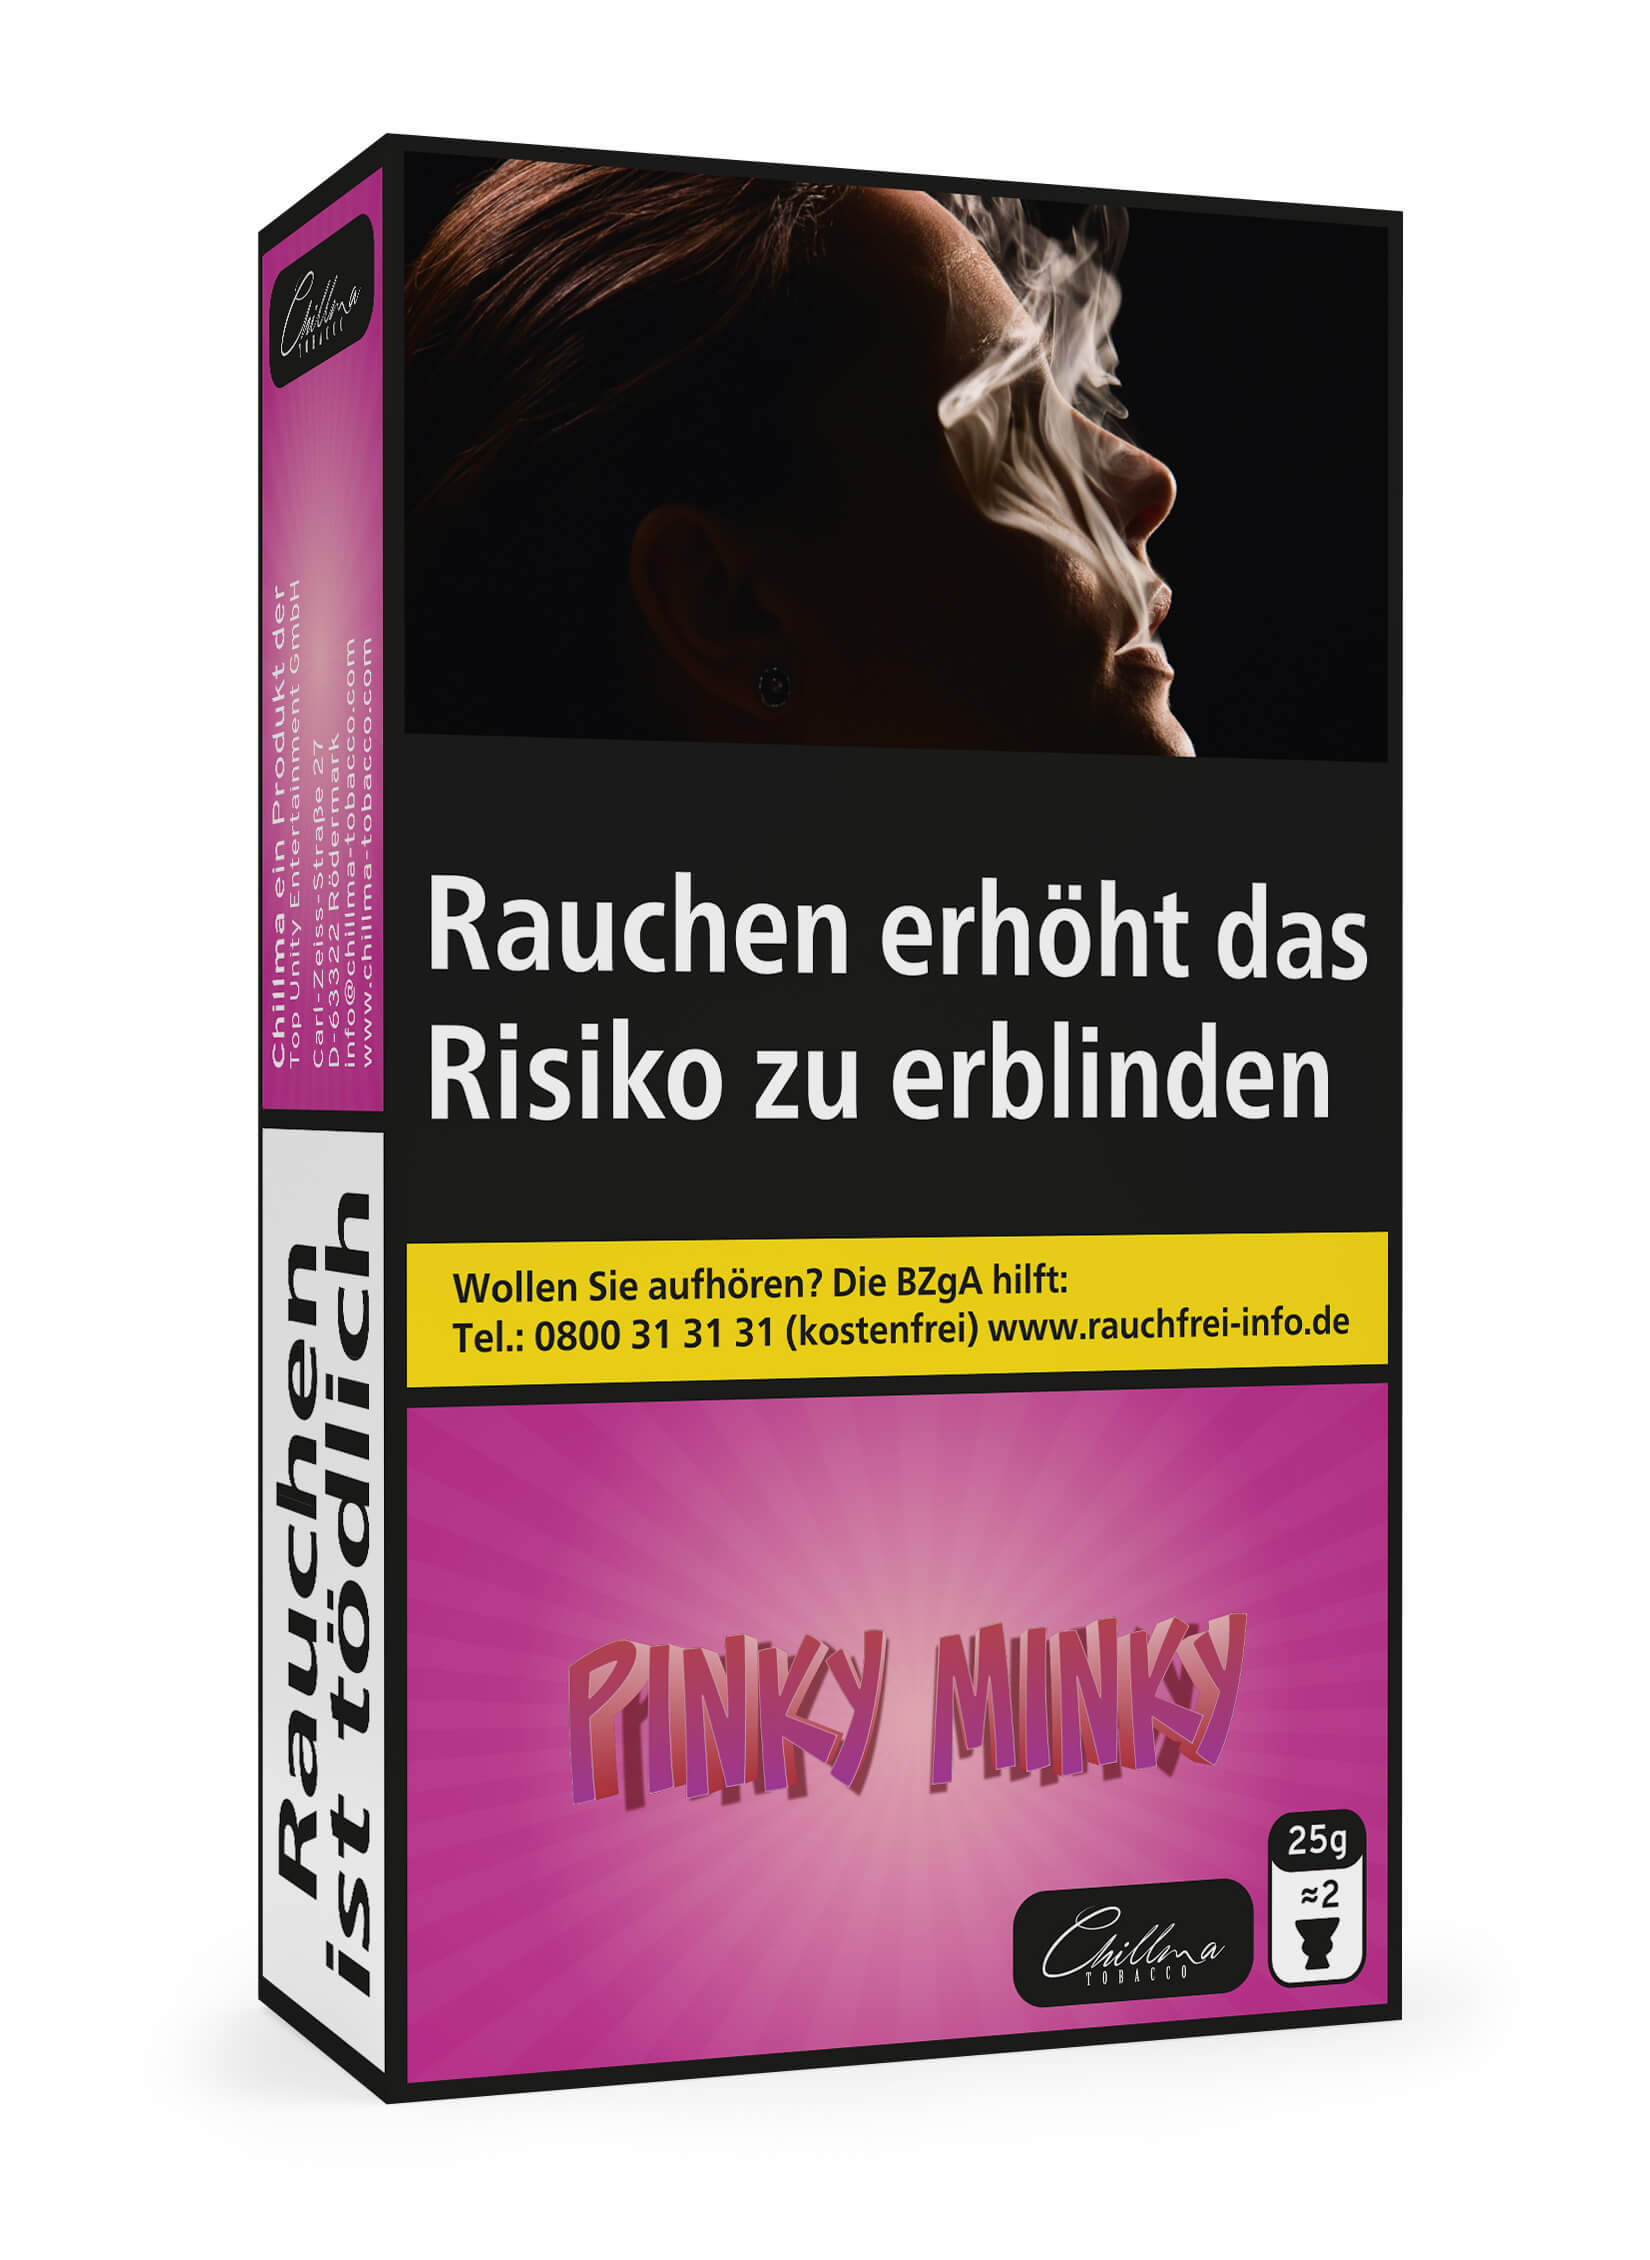 Chillma Tobacco Pinky Minky 25g